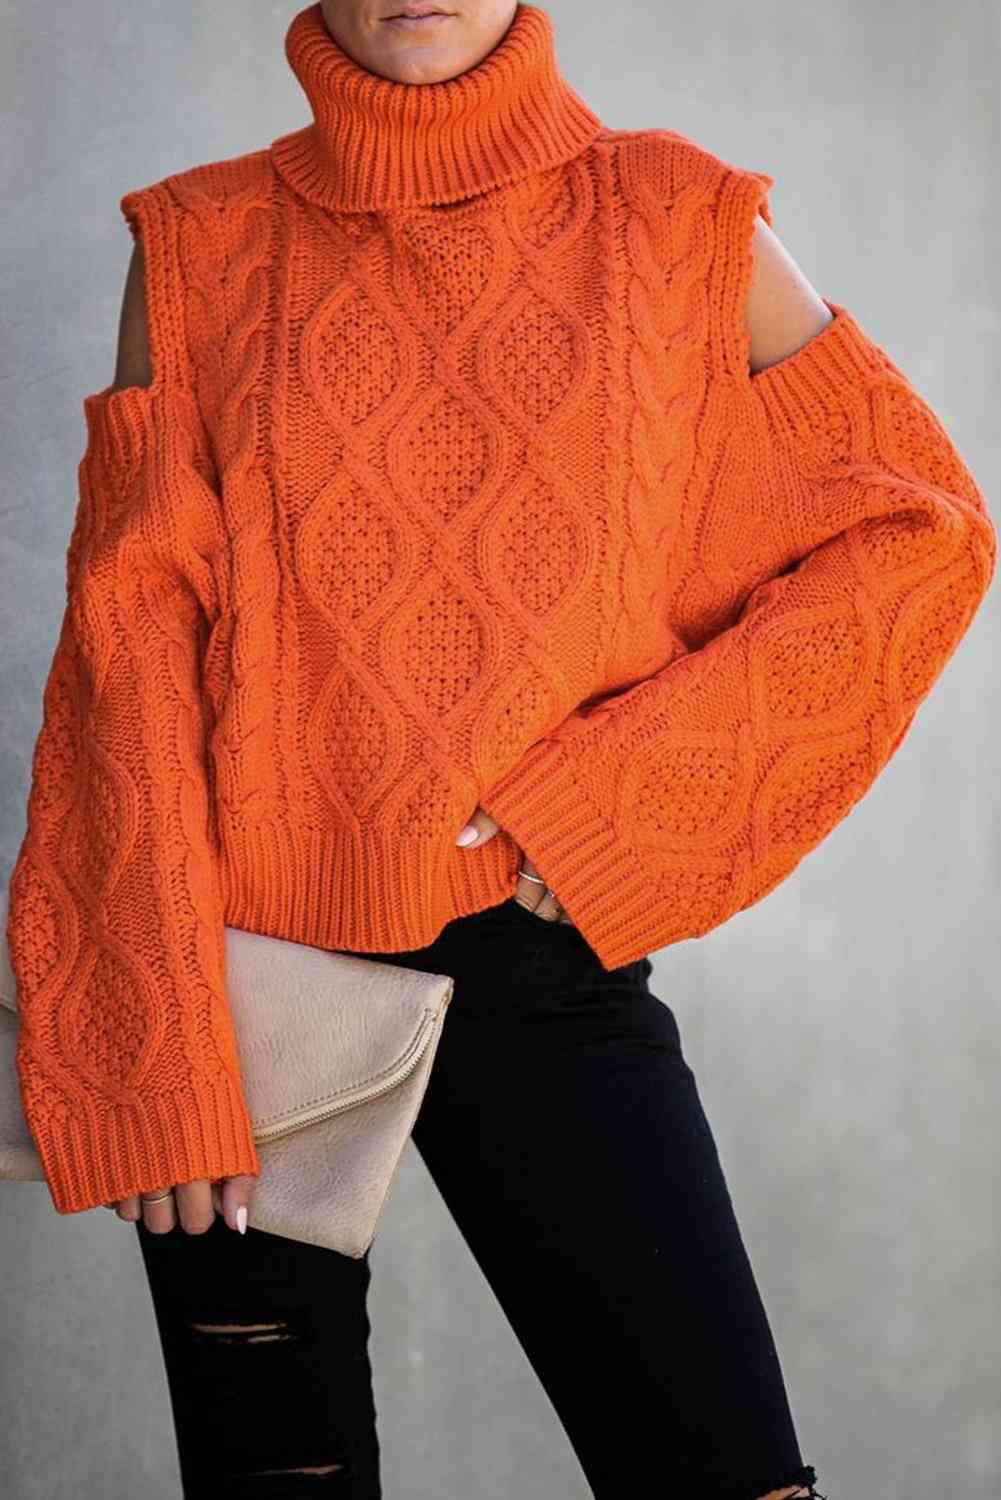 Pulover, pulover s teksturo hladnih ramen